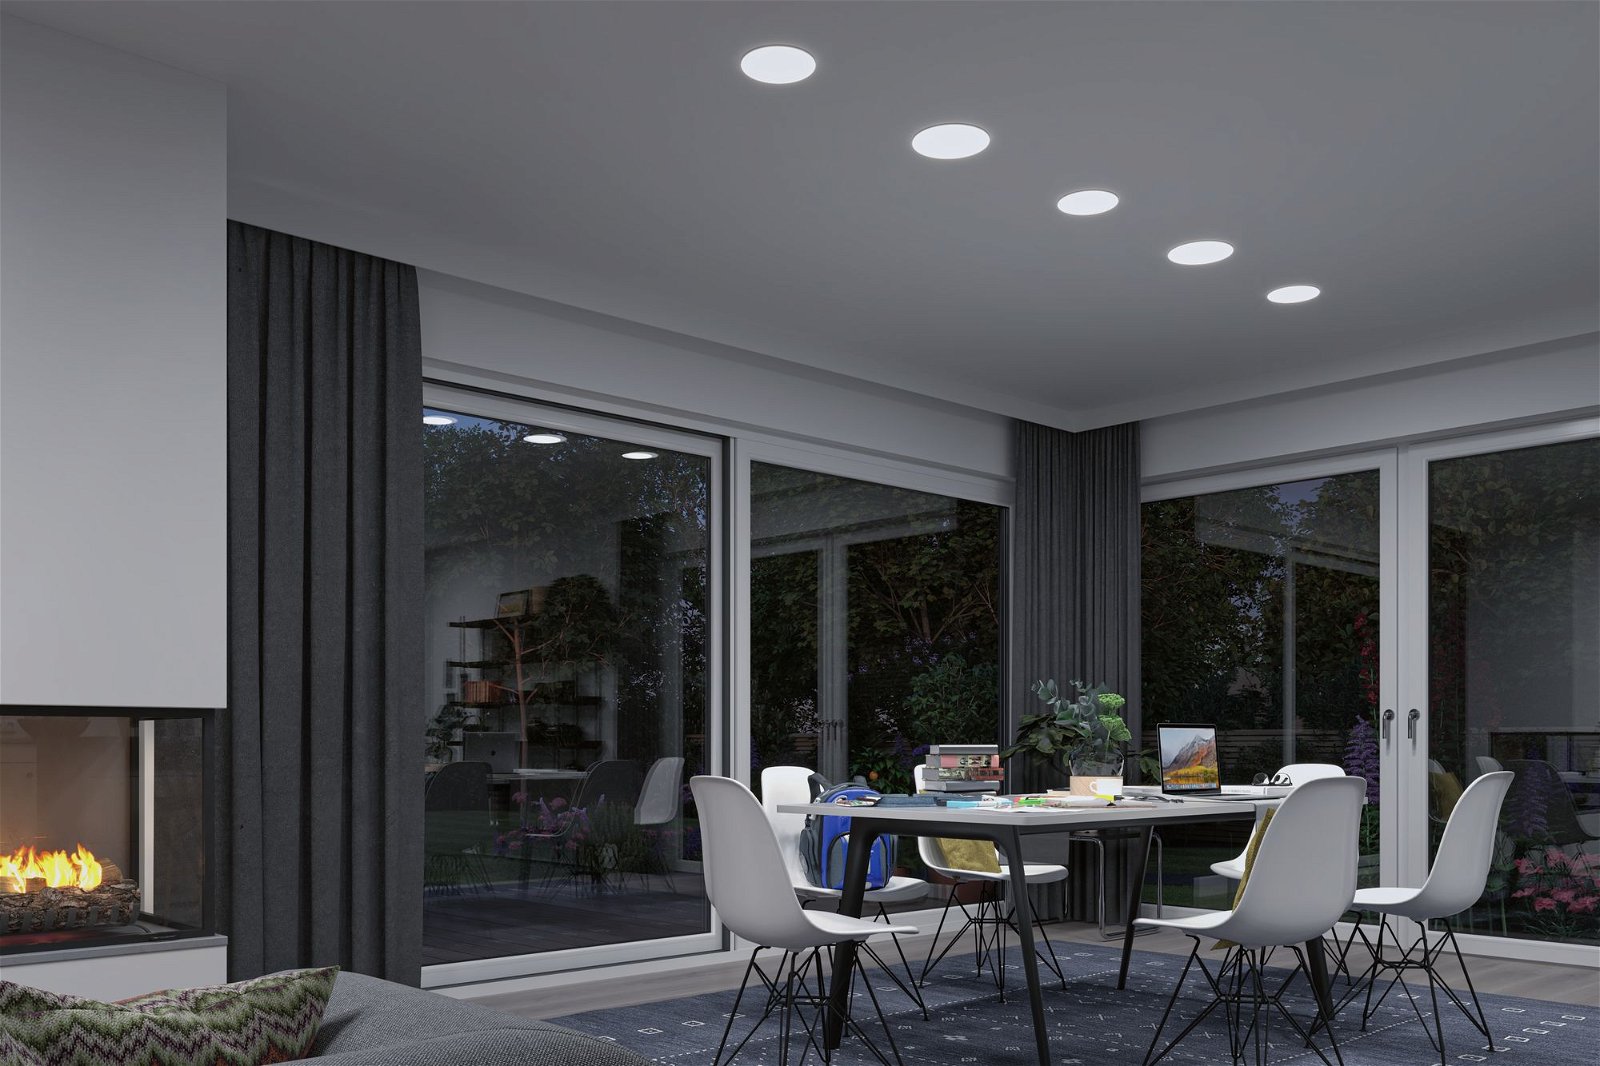 VariFit LED Einbaupanel Smart Home Zigbee Veluna IP44 IP44 rund 215mm Tunable White Satin